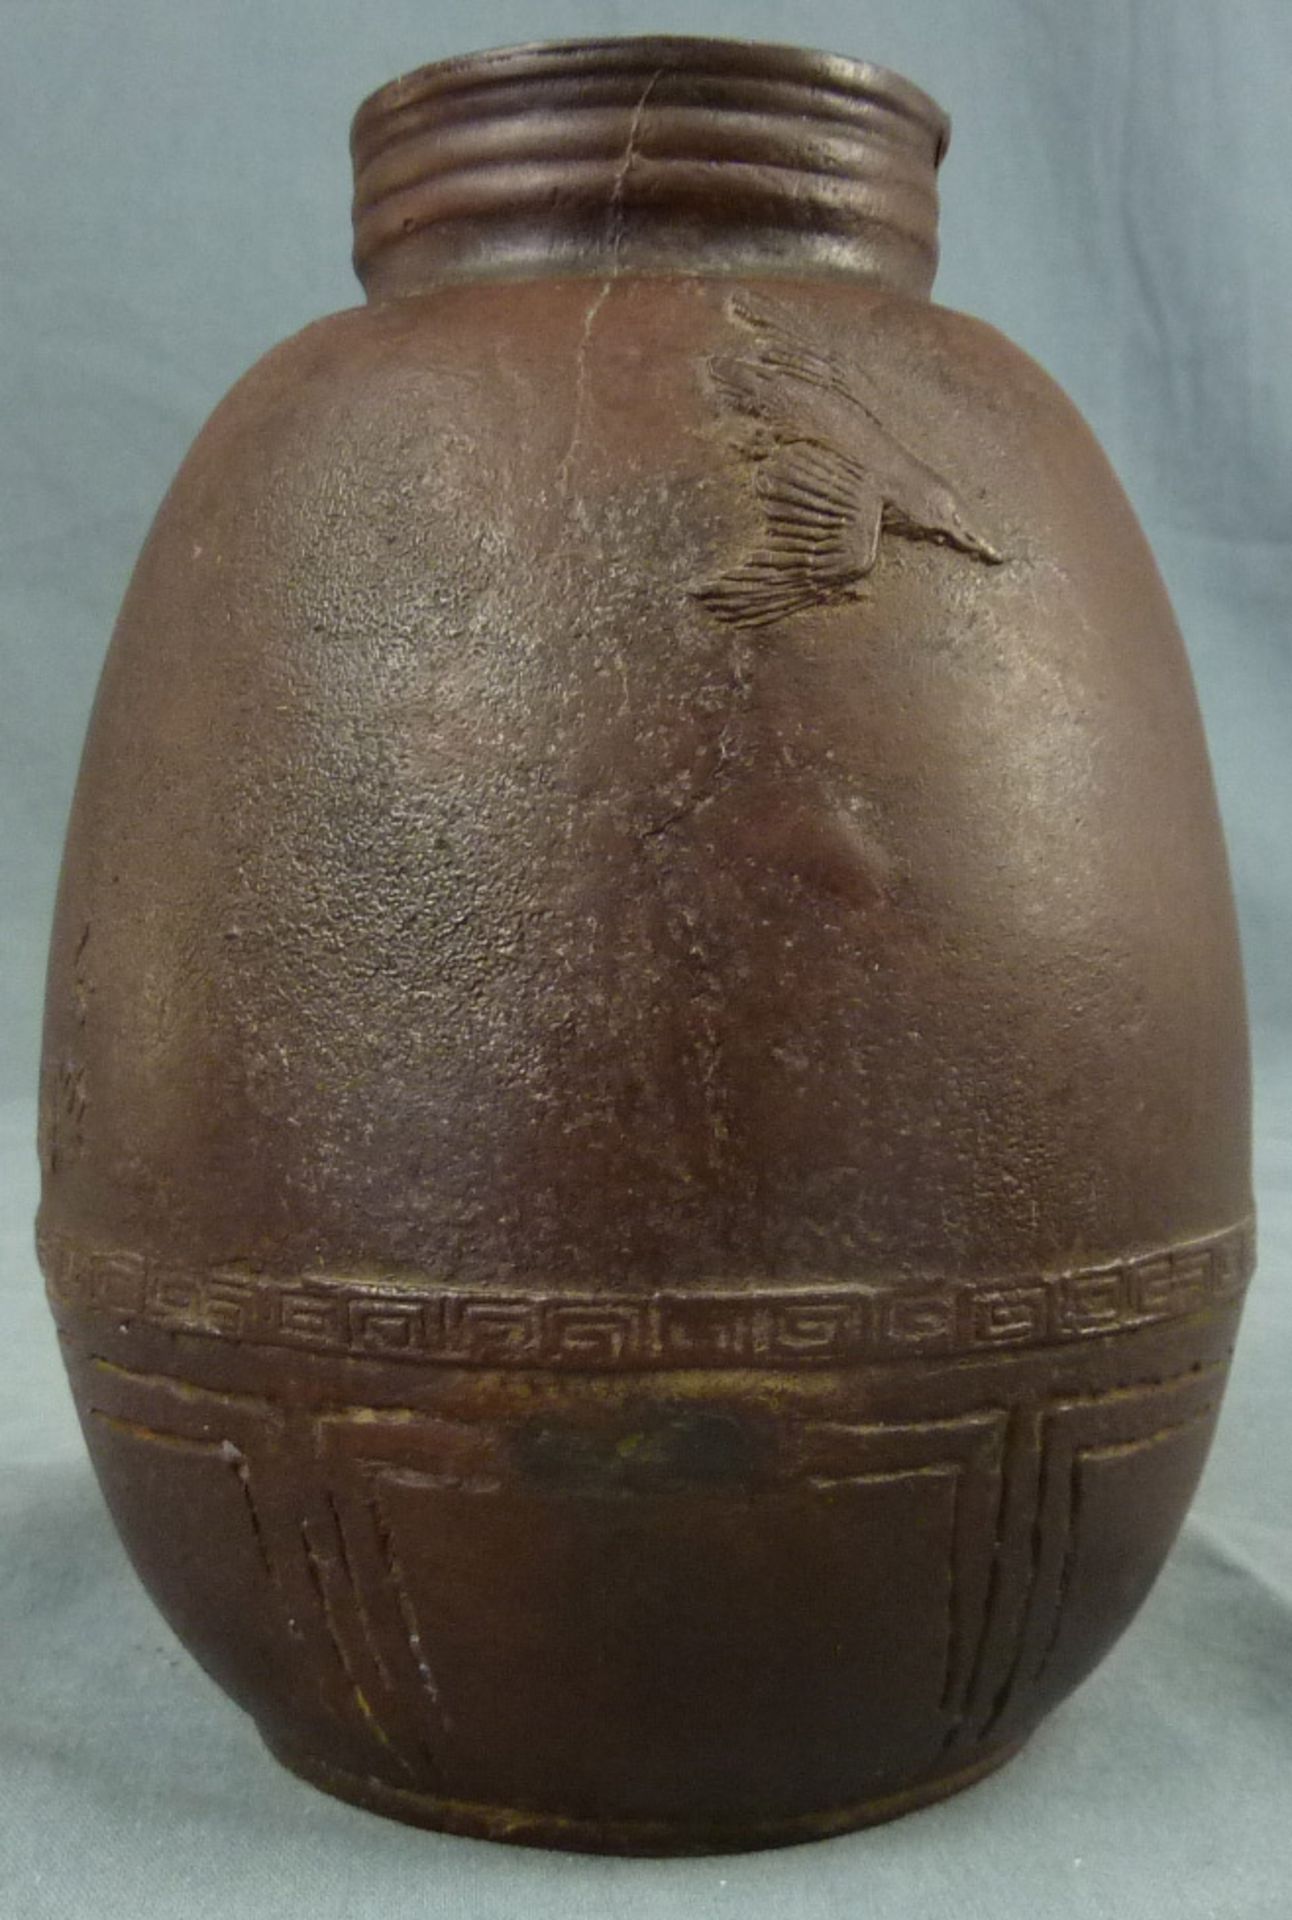 Vase. China / Japan? Bronzed. Inscriptions. Cast iron?17 cm high.Vase. Wohl China / Japan. - Bild 3 aus 8